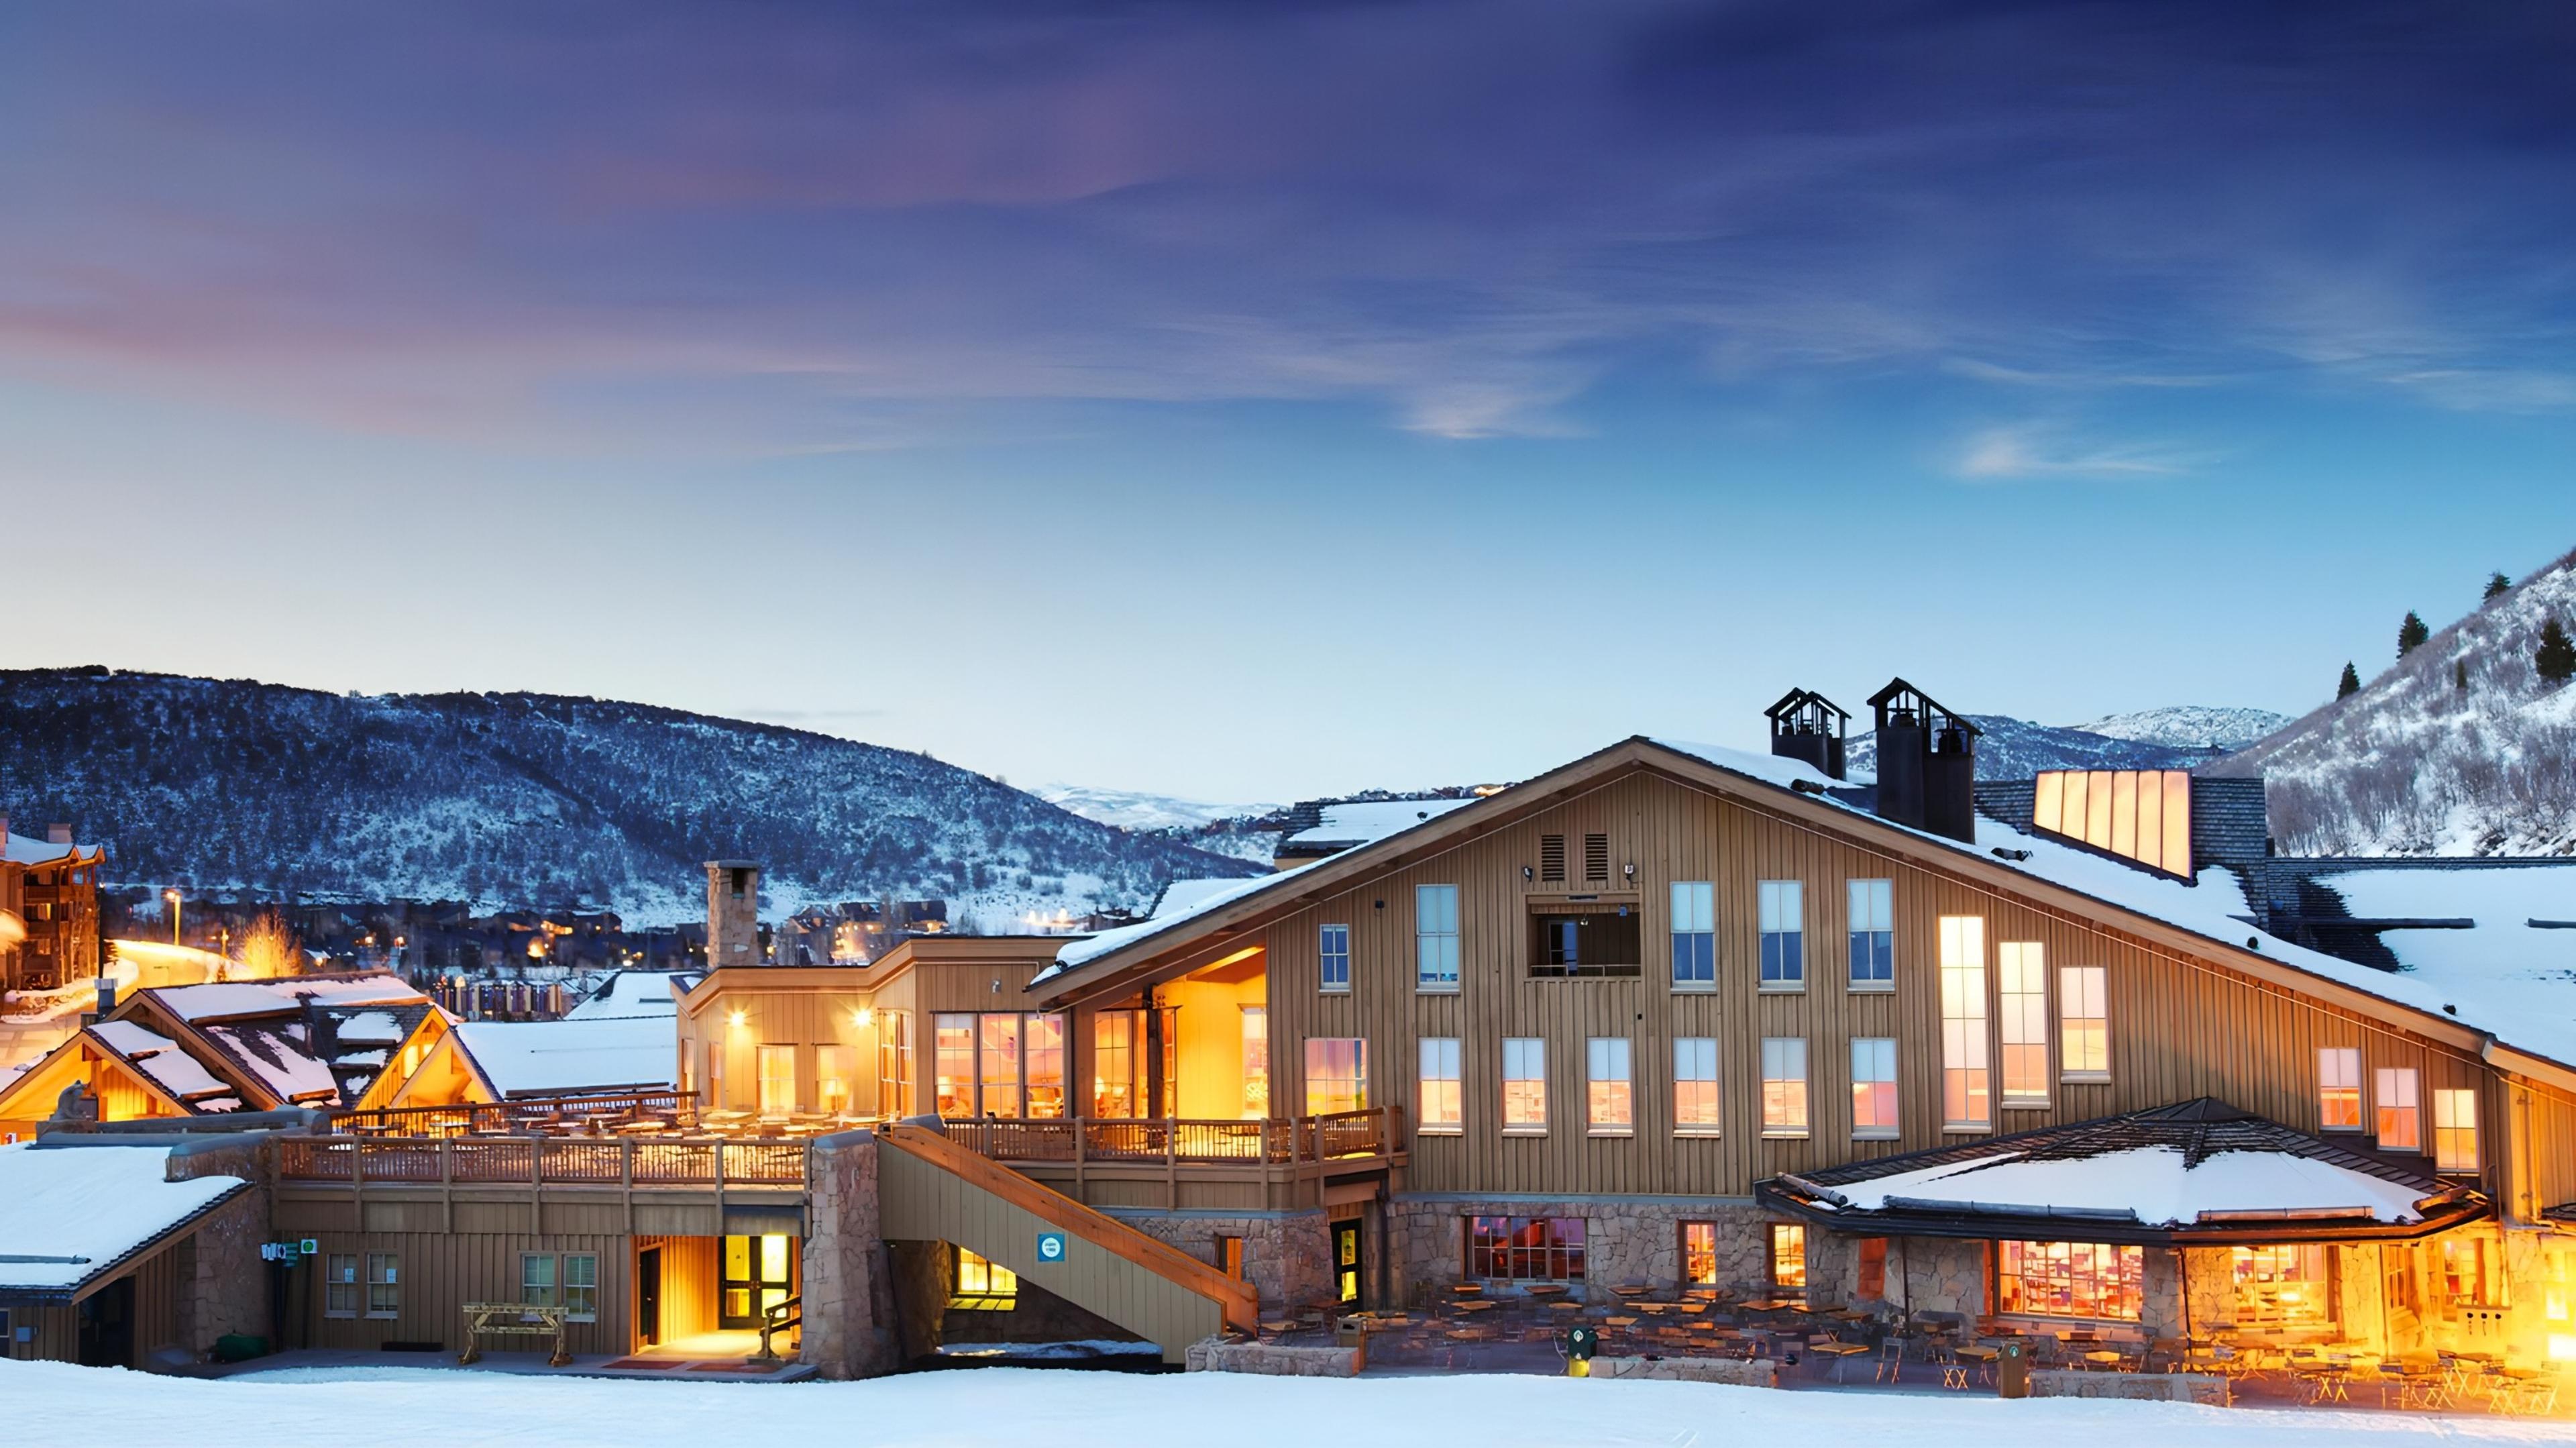 Snow Park Lodge at Deer Valley Resort